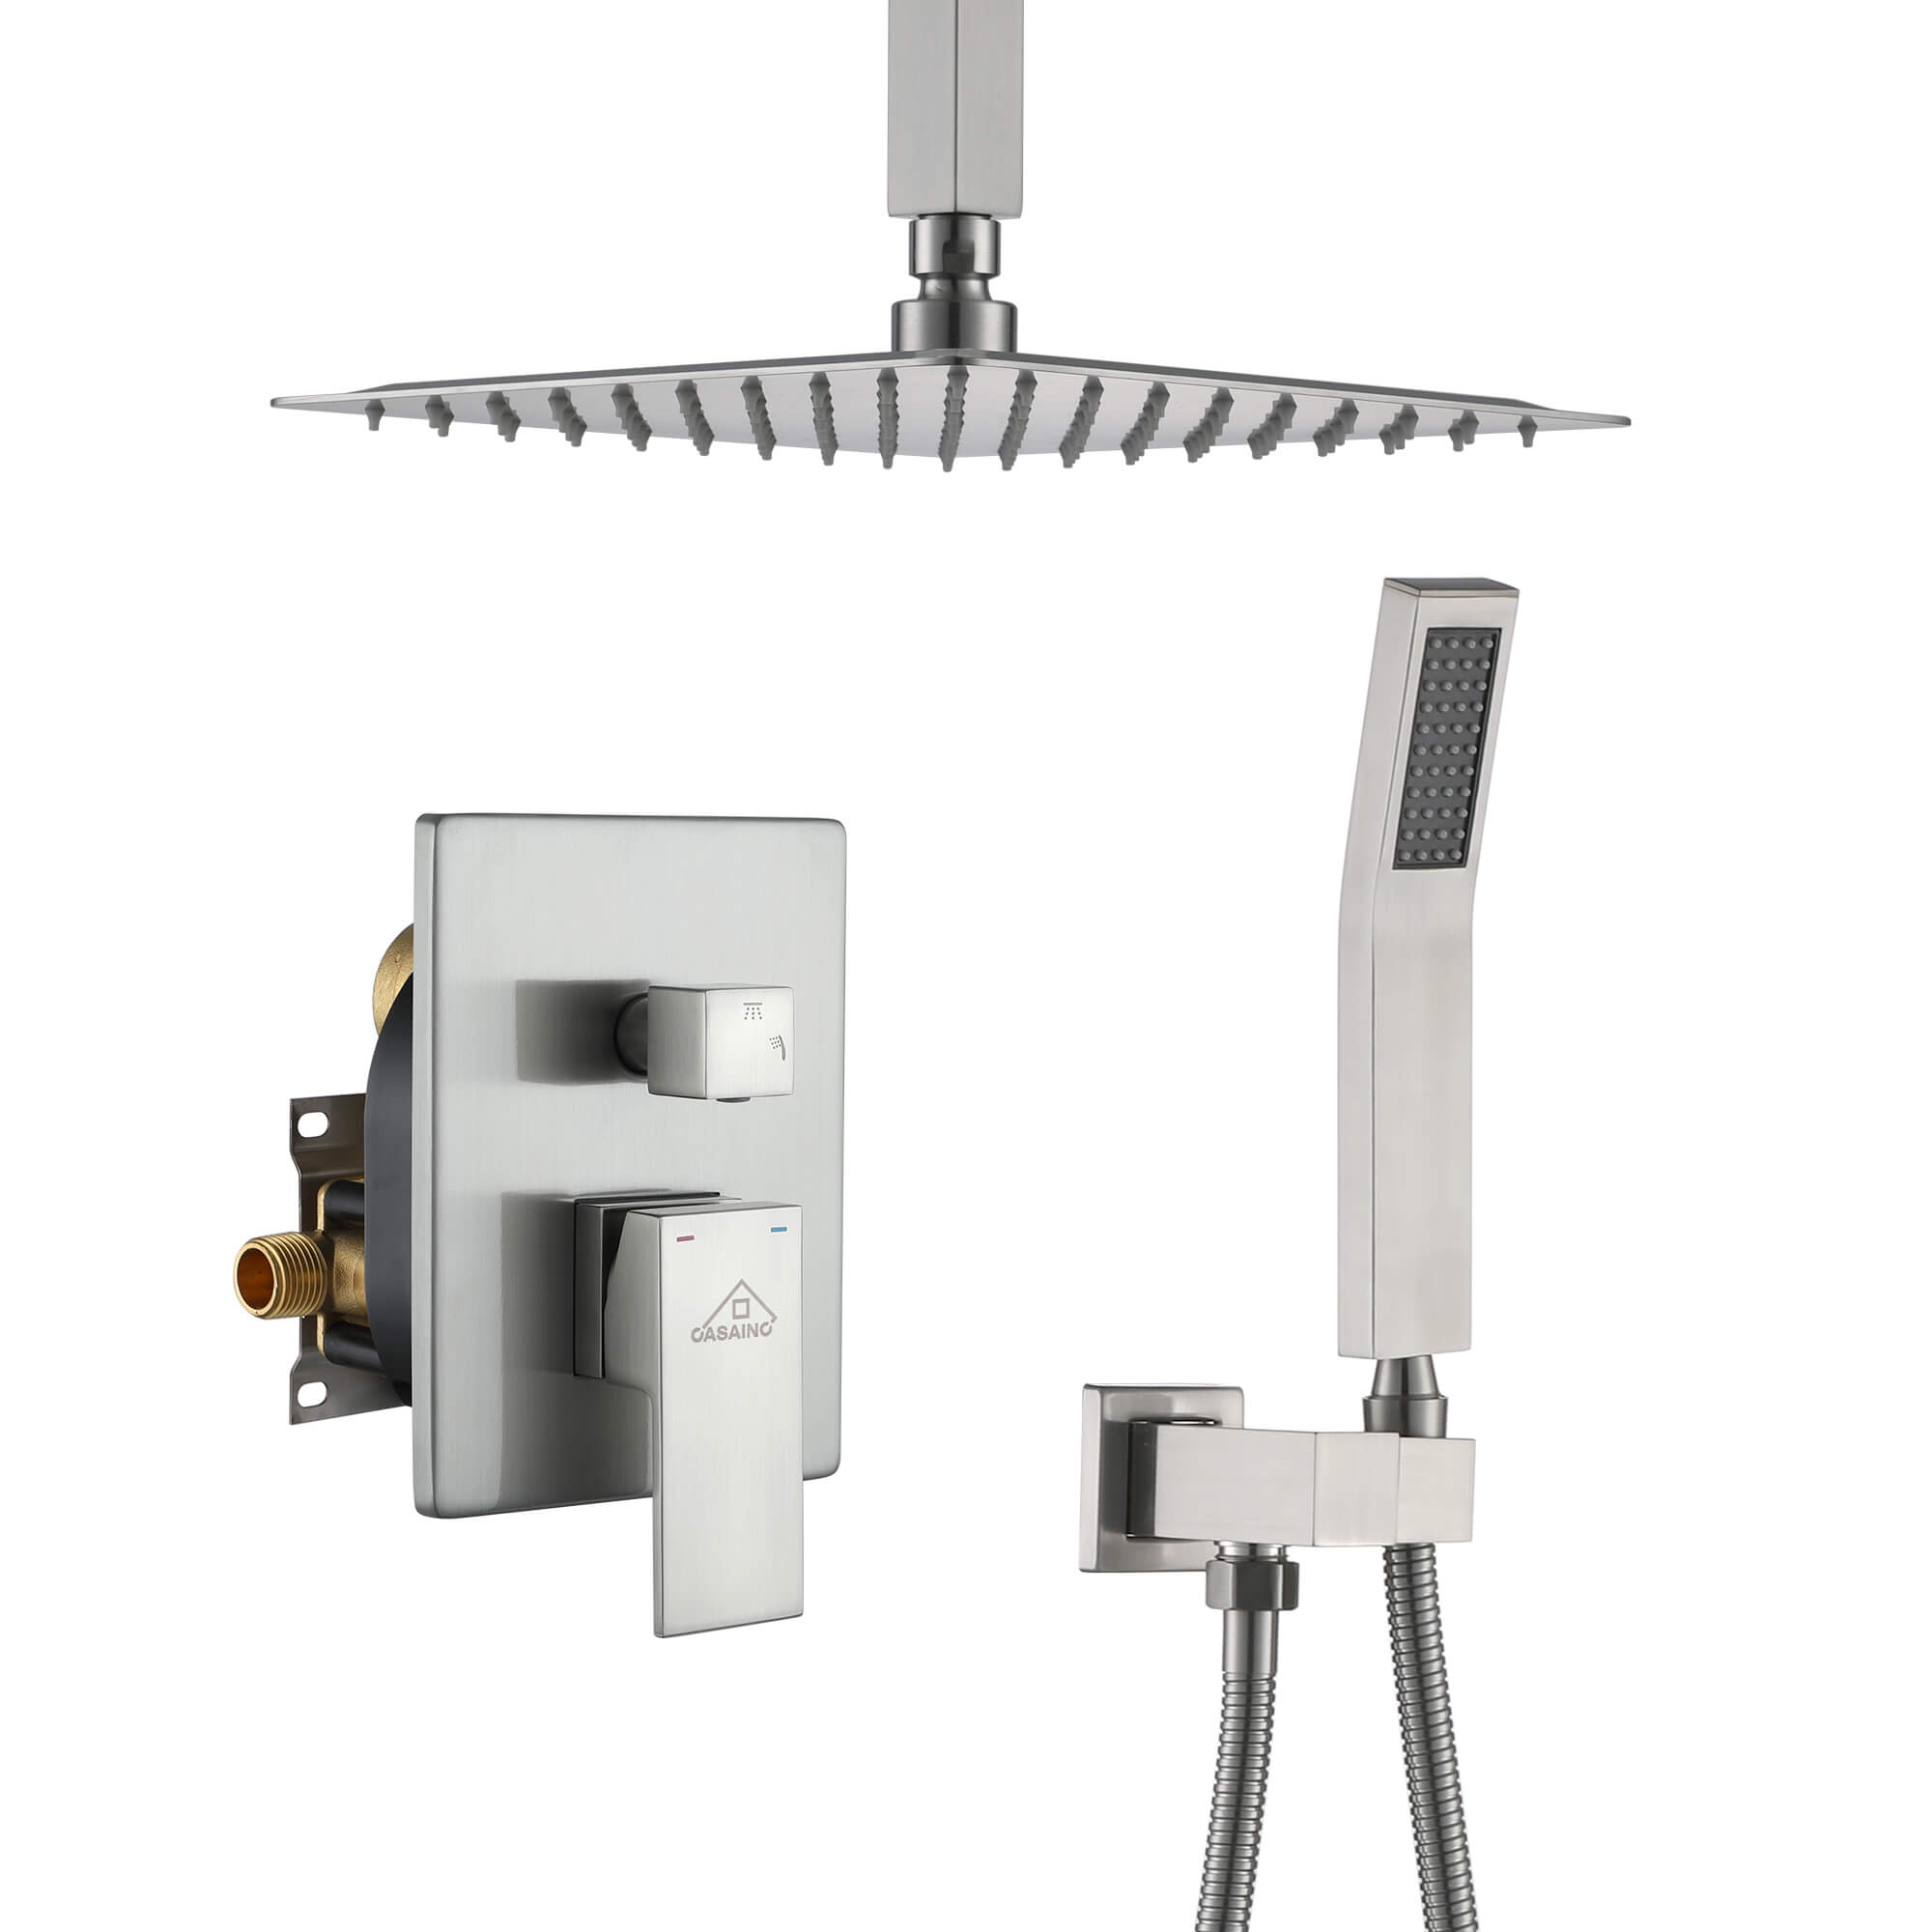 CASAINC 2-Function Shower System with Handheld Shower in Brushed Nickel/Matte Black, Ceiling Mount